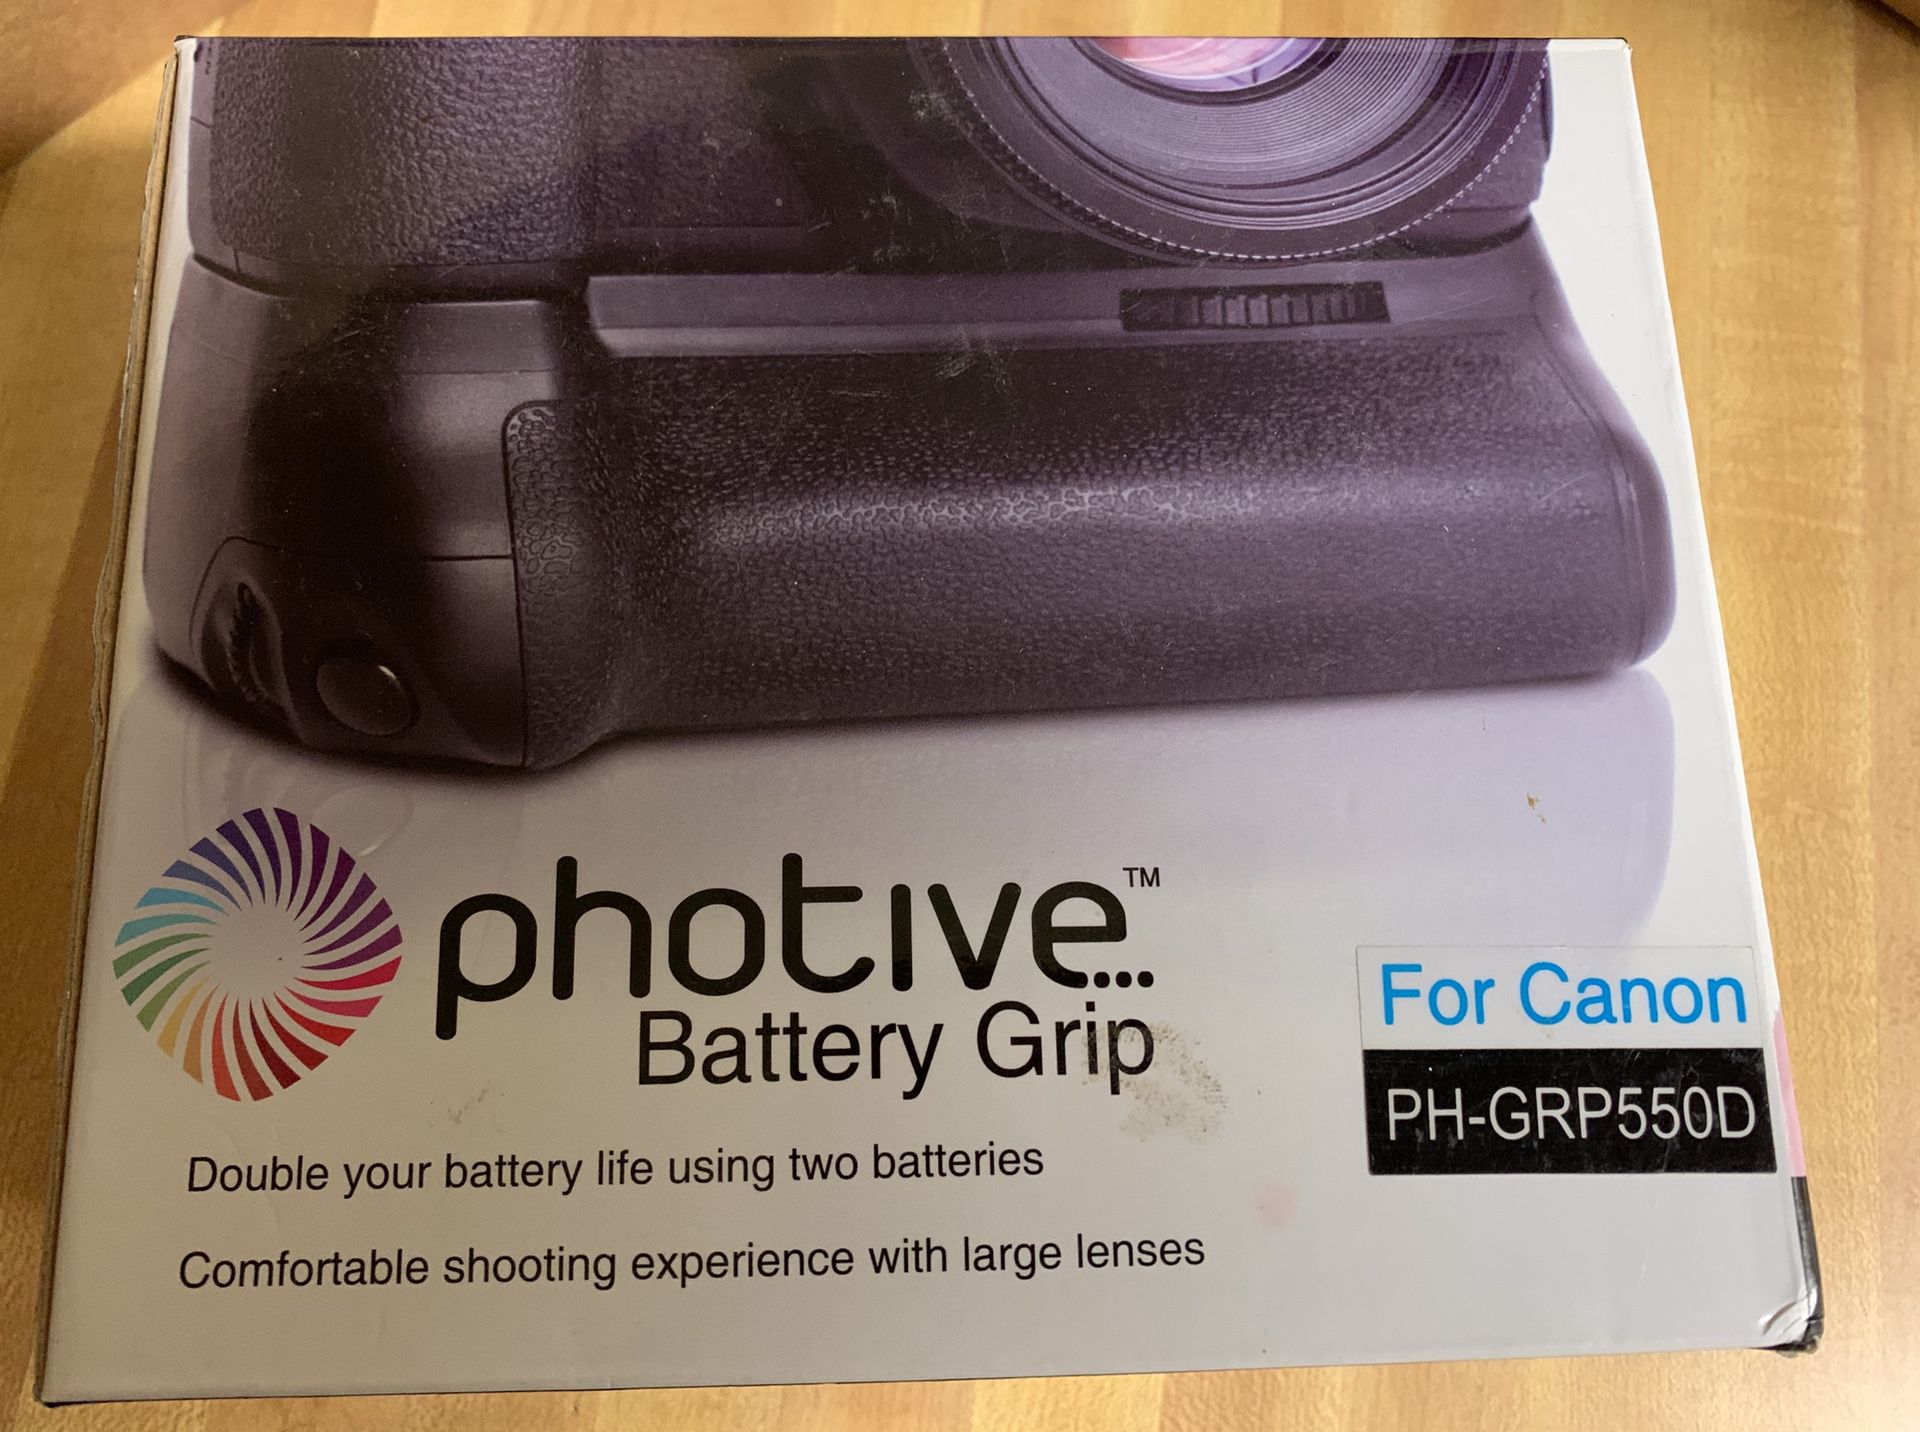 photive battery grip for canon PH-GRP550D